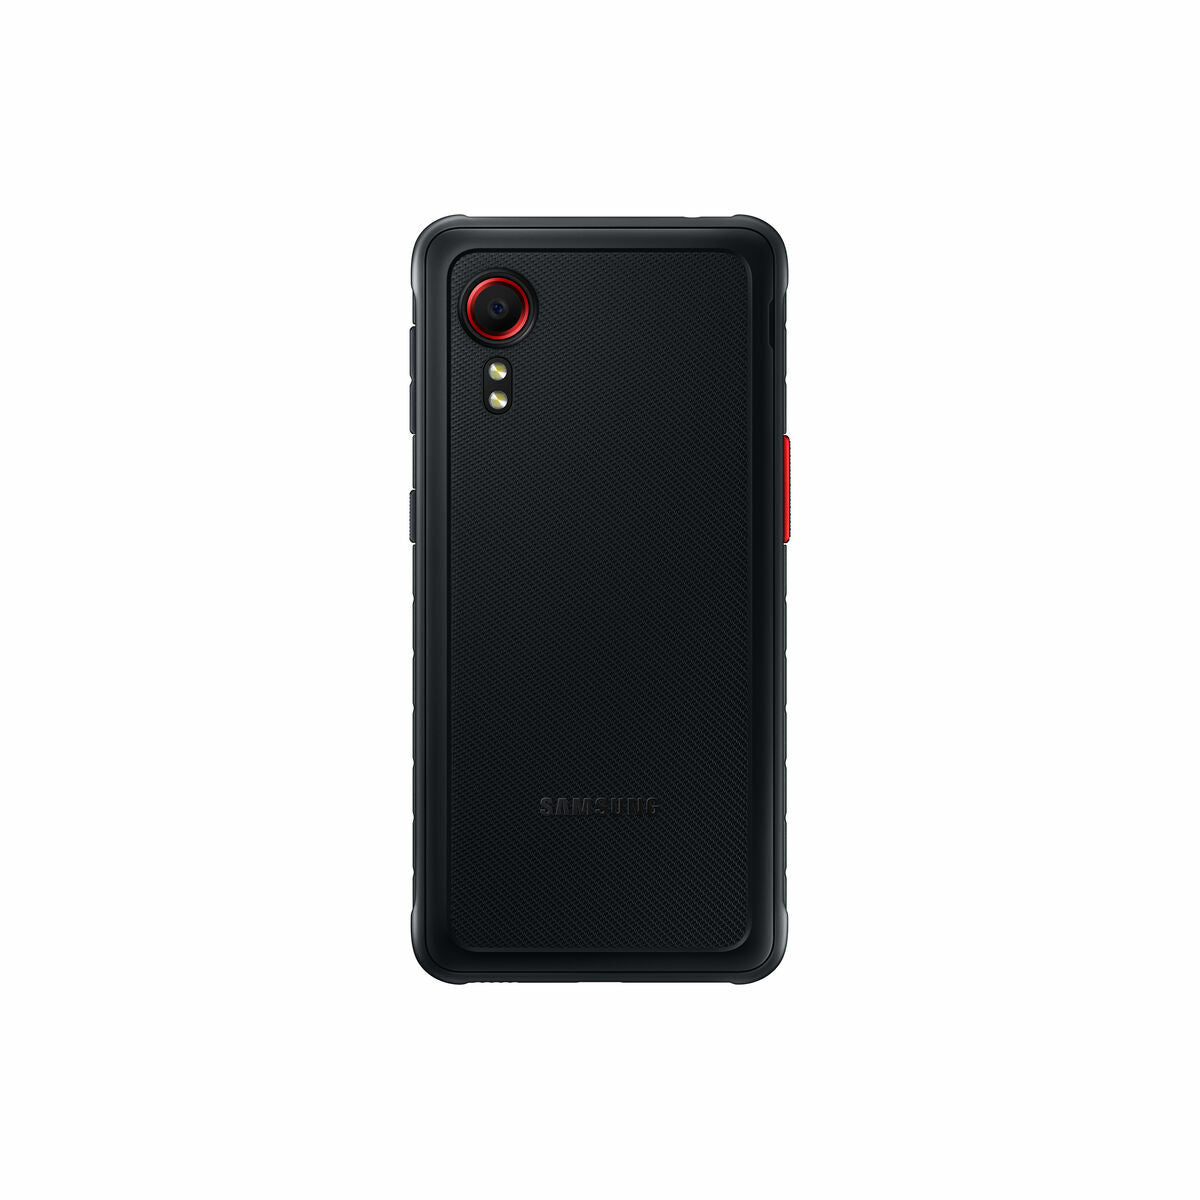 Smartphone Samsung SM-G525F/DS Black 5,3"-1